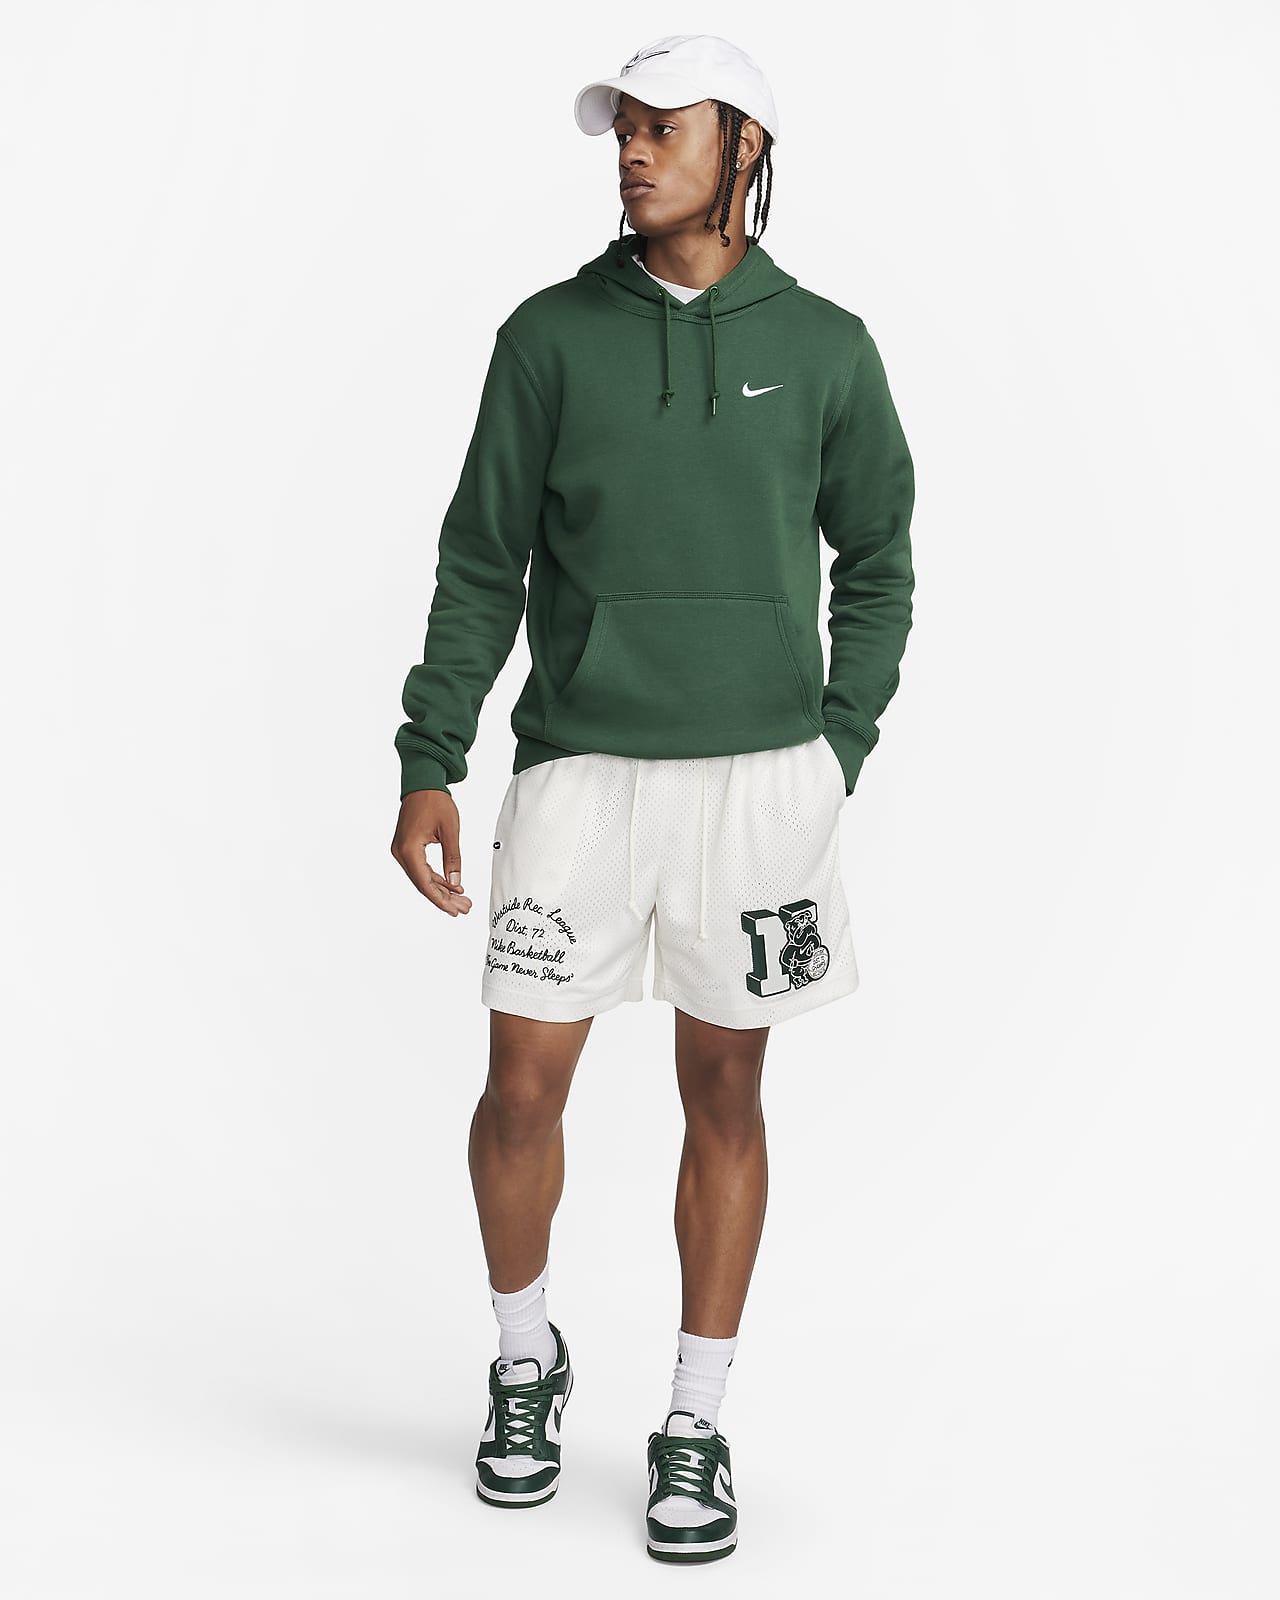 Nike Mesh Men\'s Shorts. Authentics